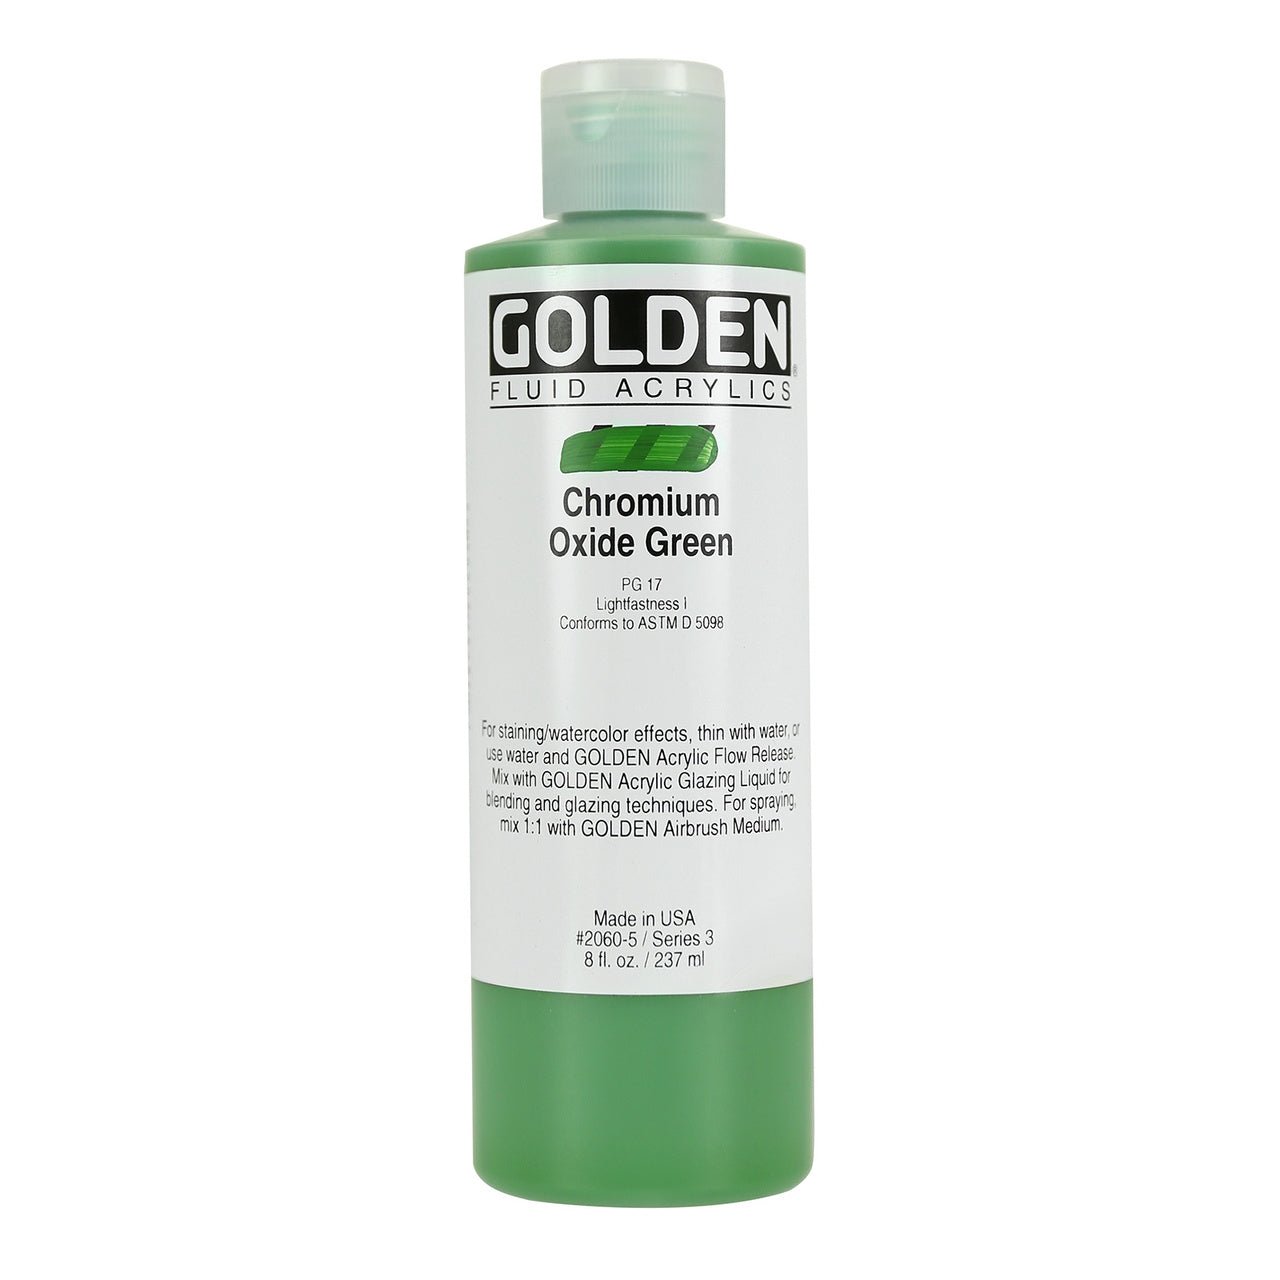 Golden Fluid Acrylic Chromium Oxide Green 8 oz - merriartist.com